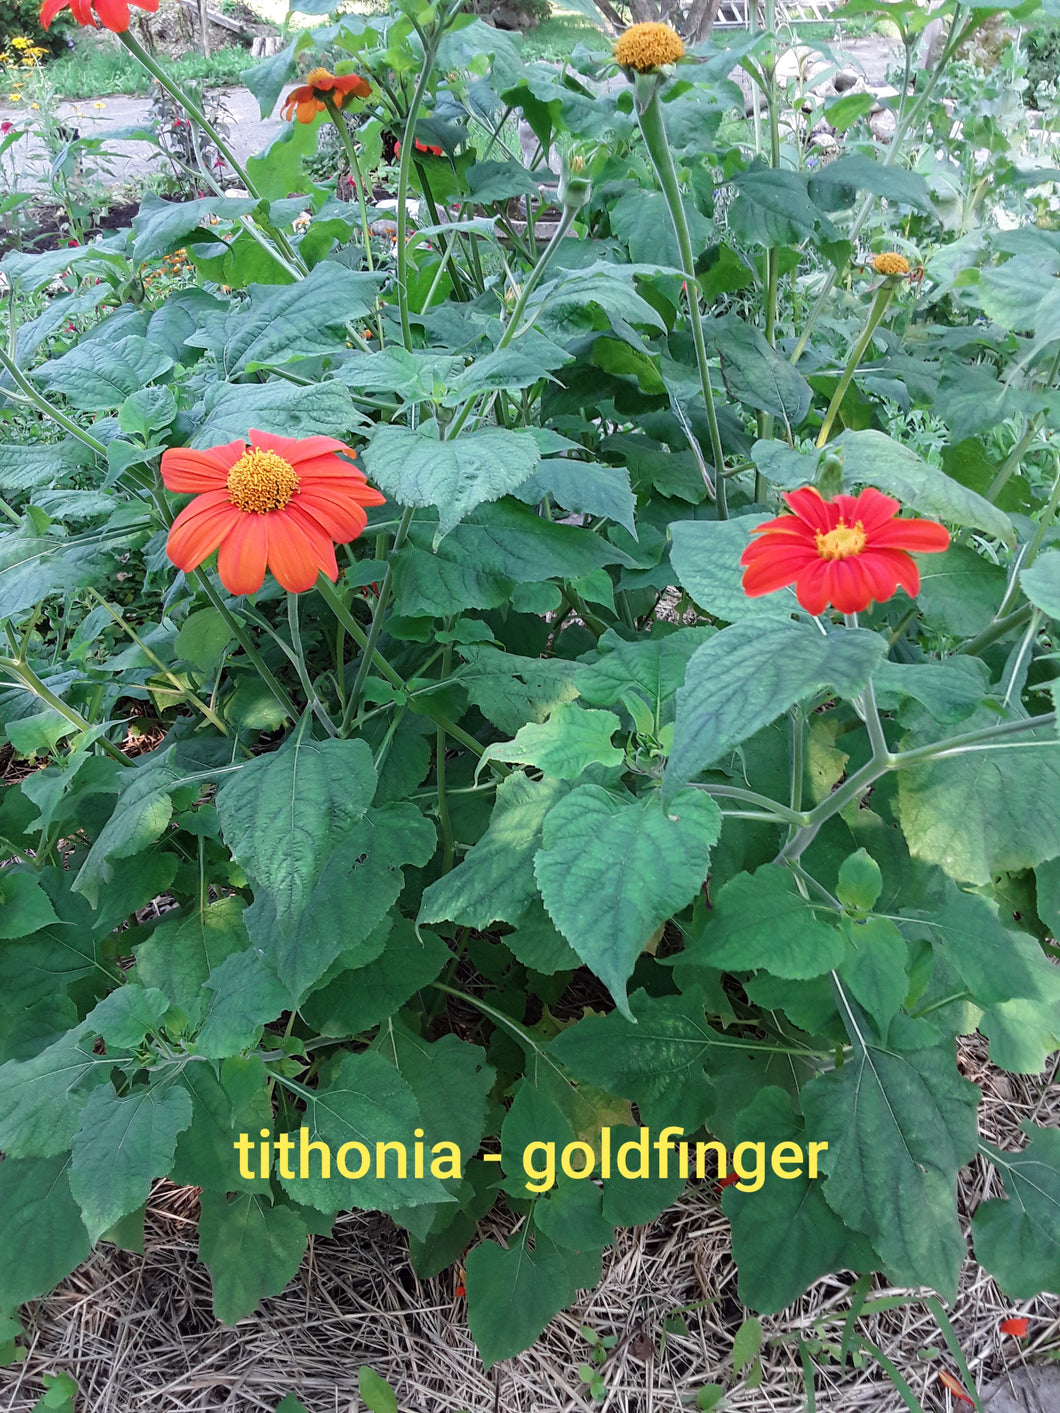 Tithonia: Goldfinger - seeds